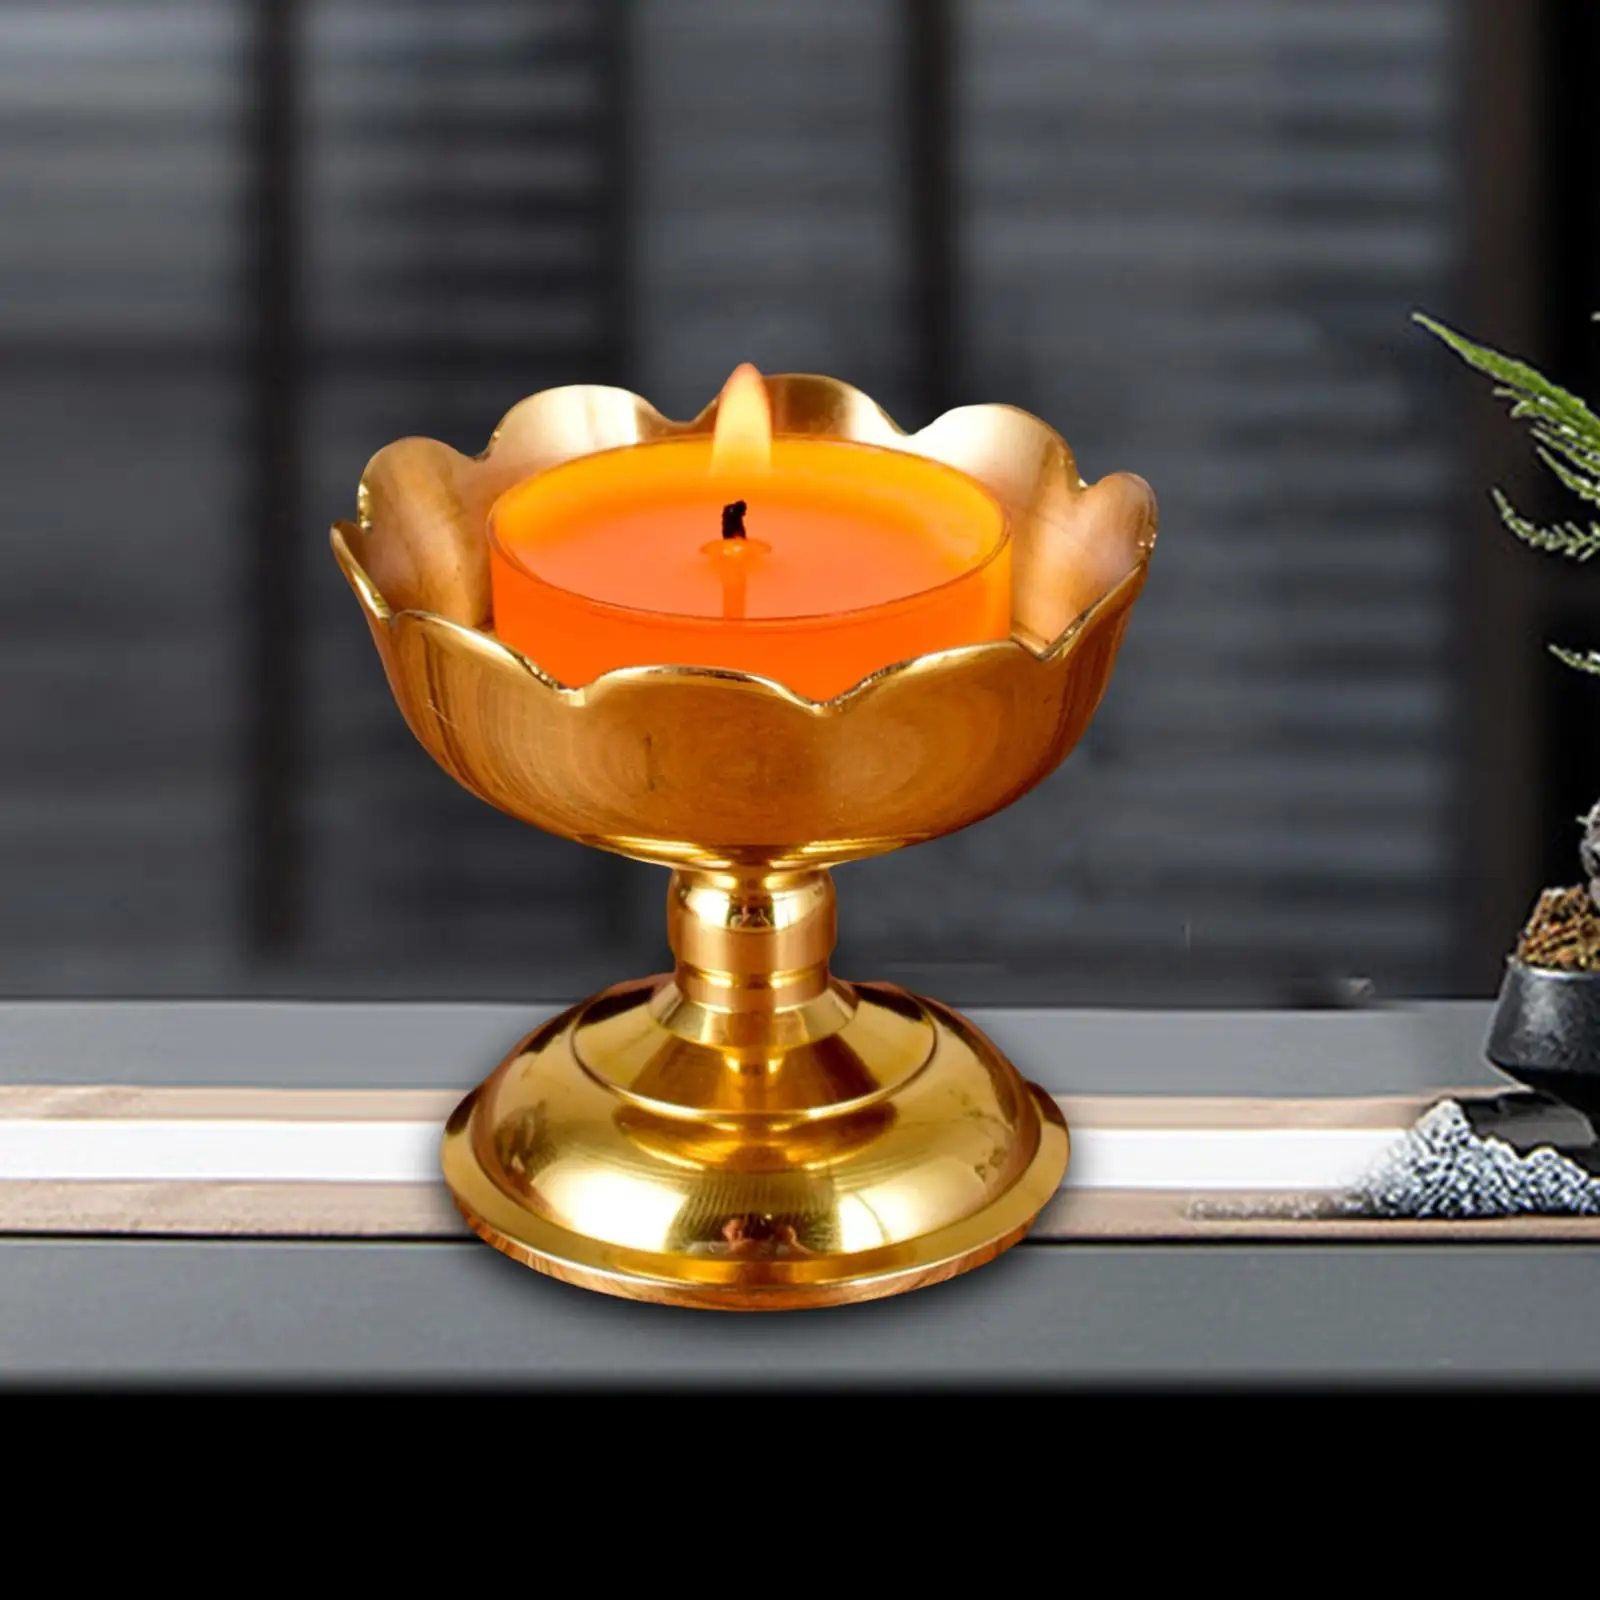 Metal Ghee Lamp Holder Buddha Buddhist Supplies Desktop Height 5cm Crafts Temple Table Centerpiece Vintage Style Oil Lamp Holder